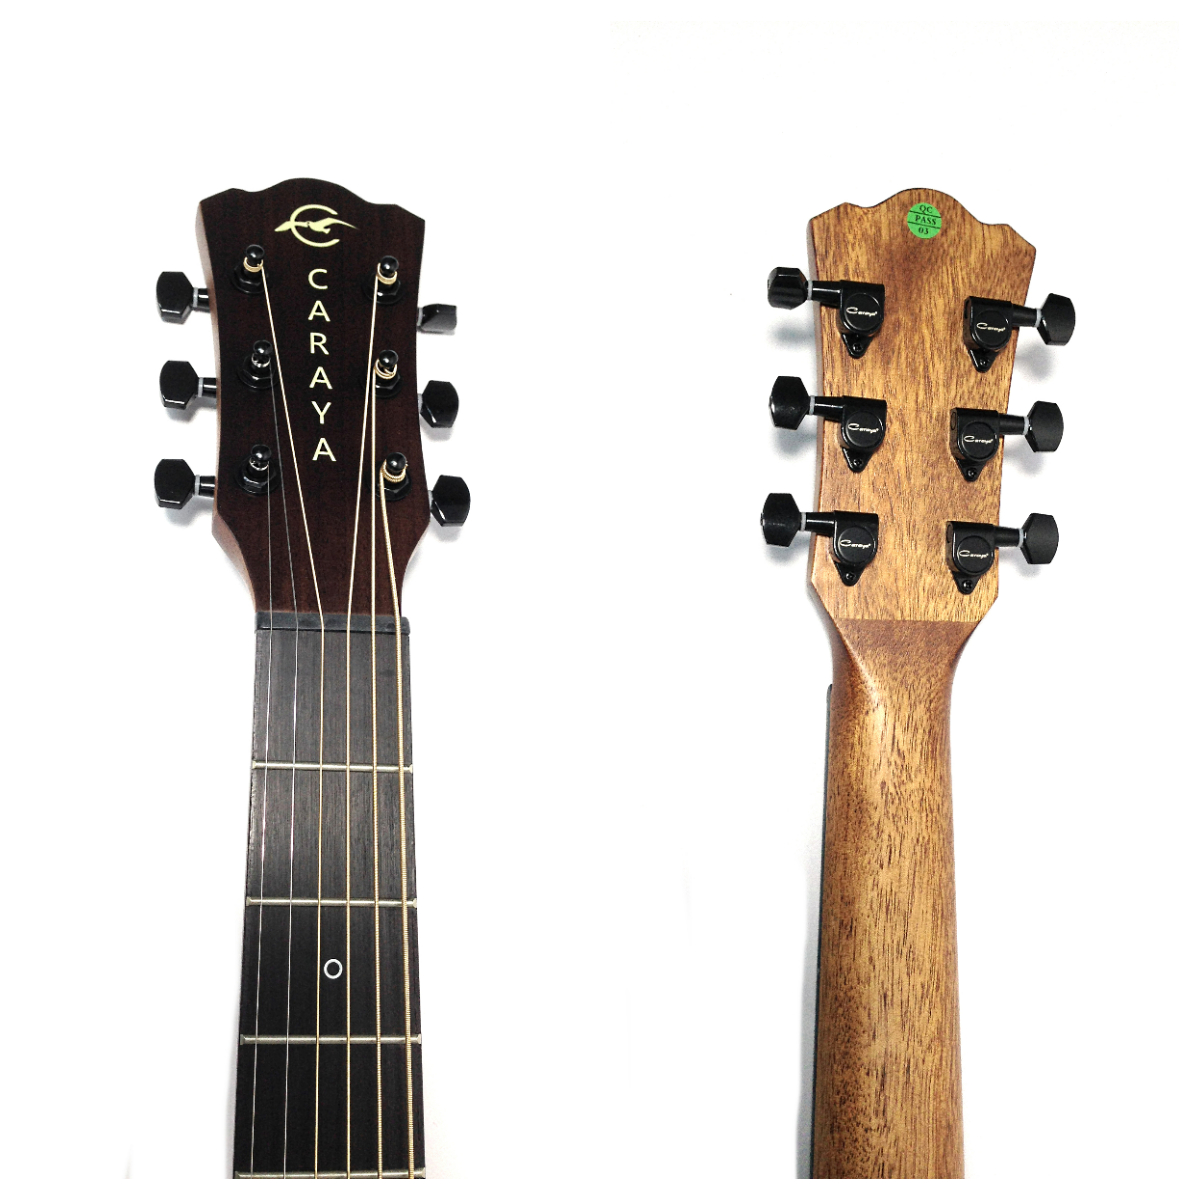 Left-Hand Caraya safair 40 CEQ-LH All-Mahogany Parlor Acoustic Guitar w/EQ  + Gig Bag + Strings